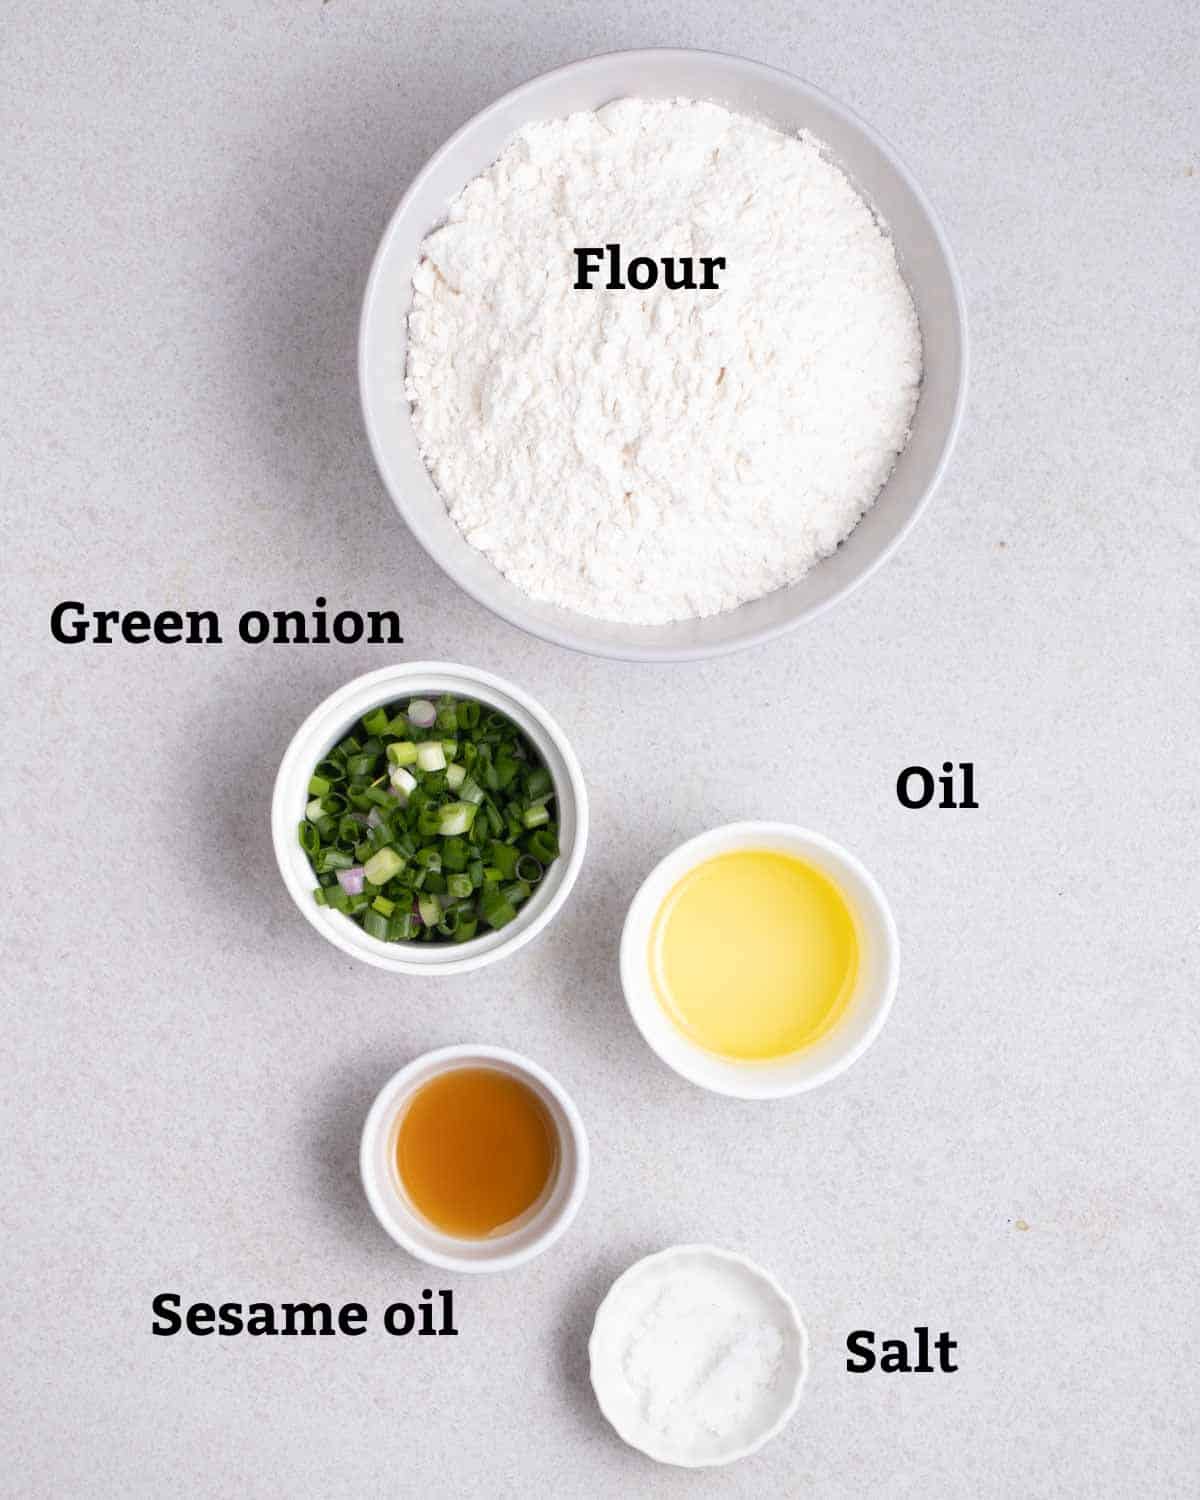 Ingredients needed like flour, green onion, oil, sesame oil, and salt.